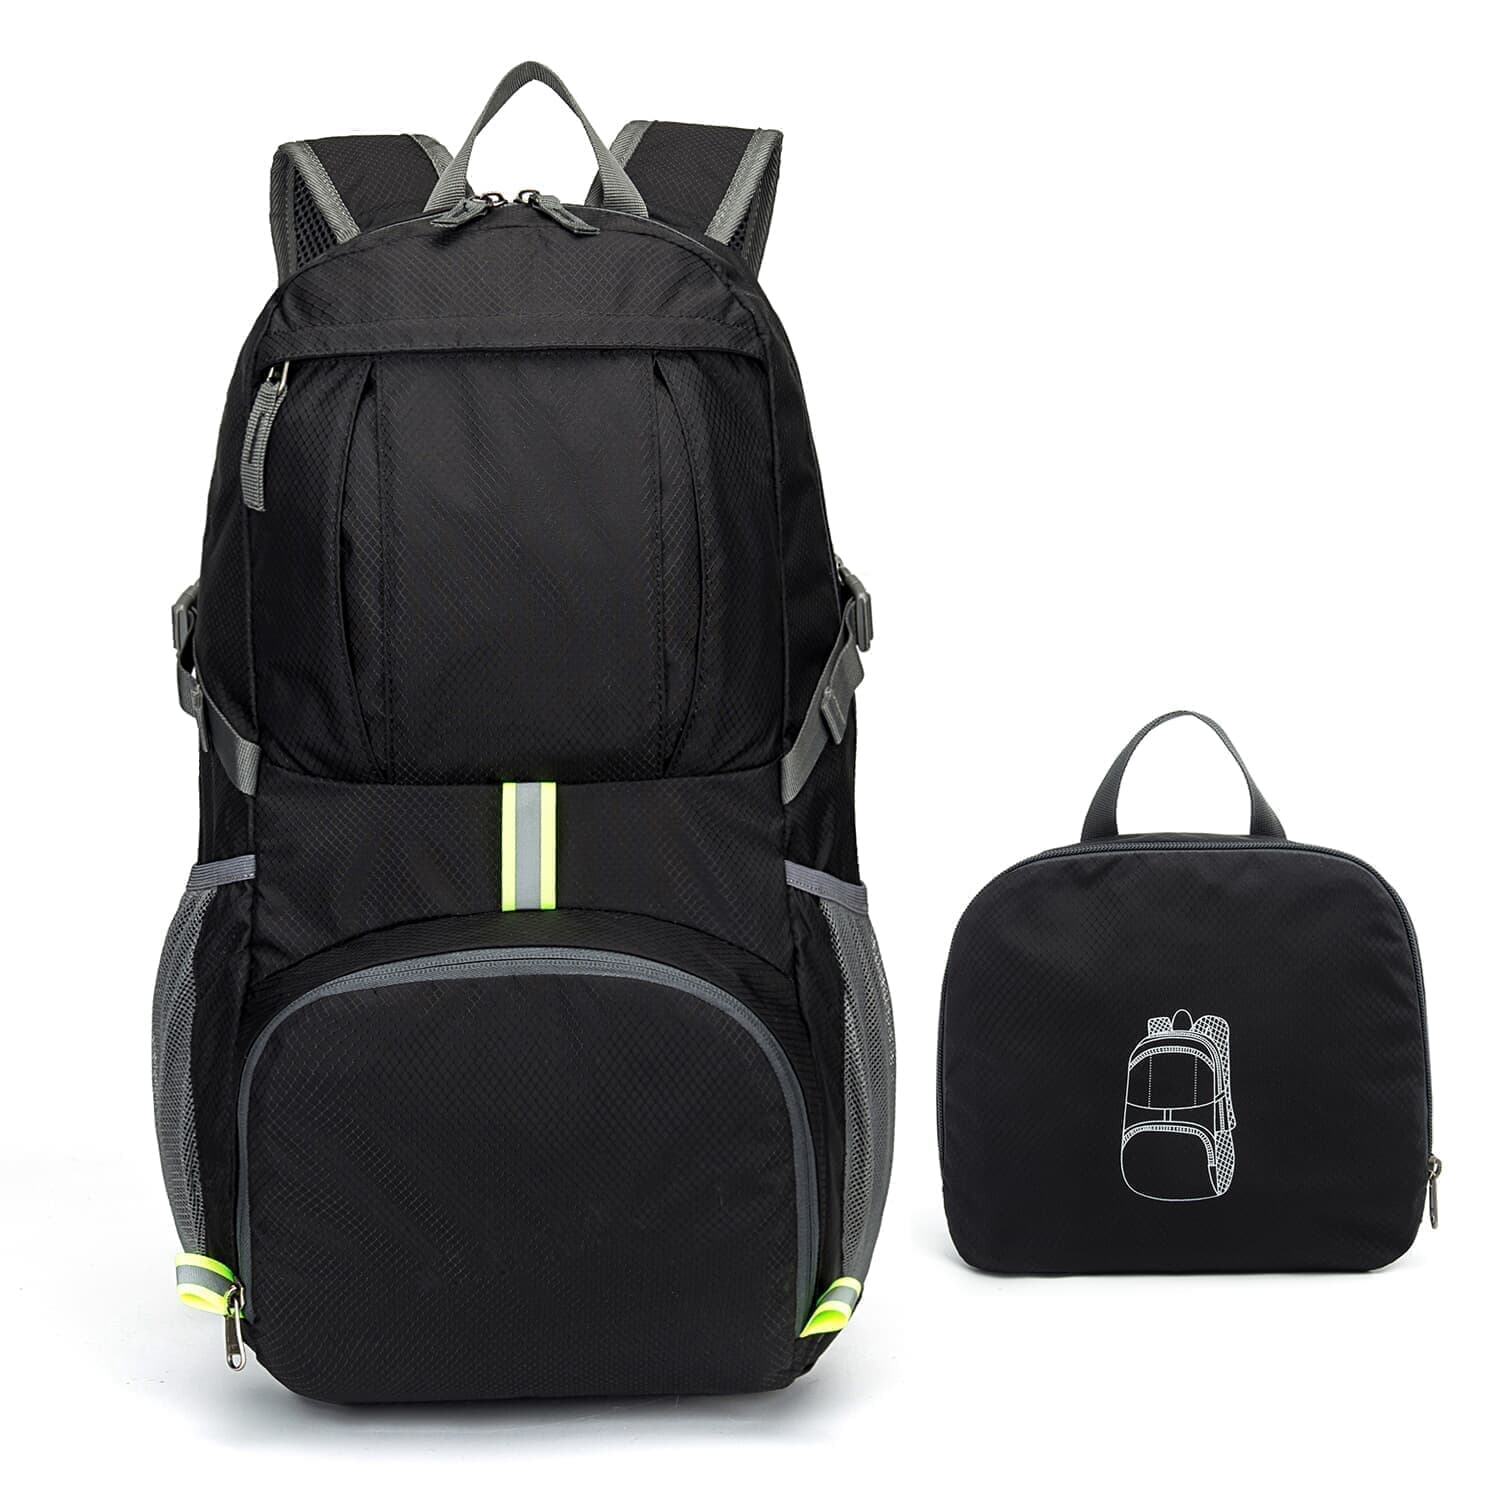 Homfu Foldable Backpack For Travel Packable Daypack For Hiking Camping Waterproof Lightweight Bag Black (Black-35L)  